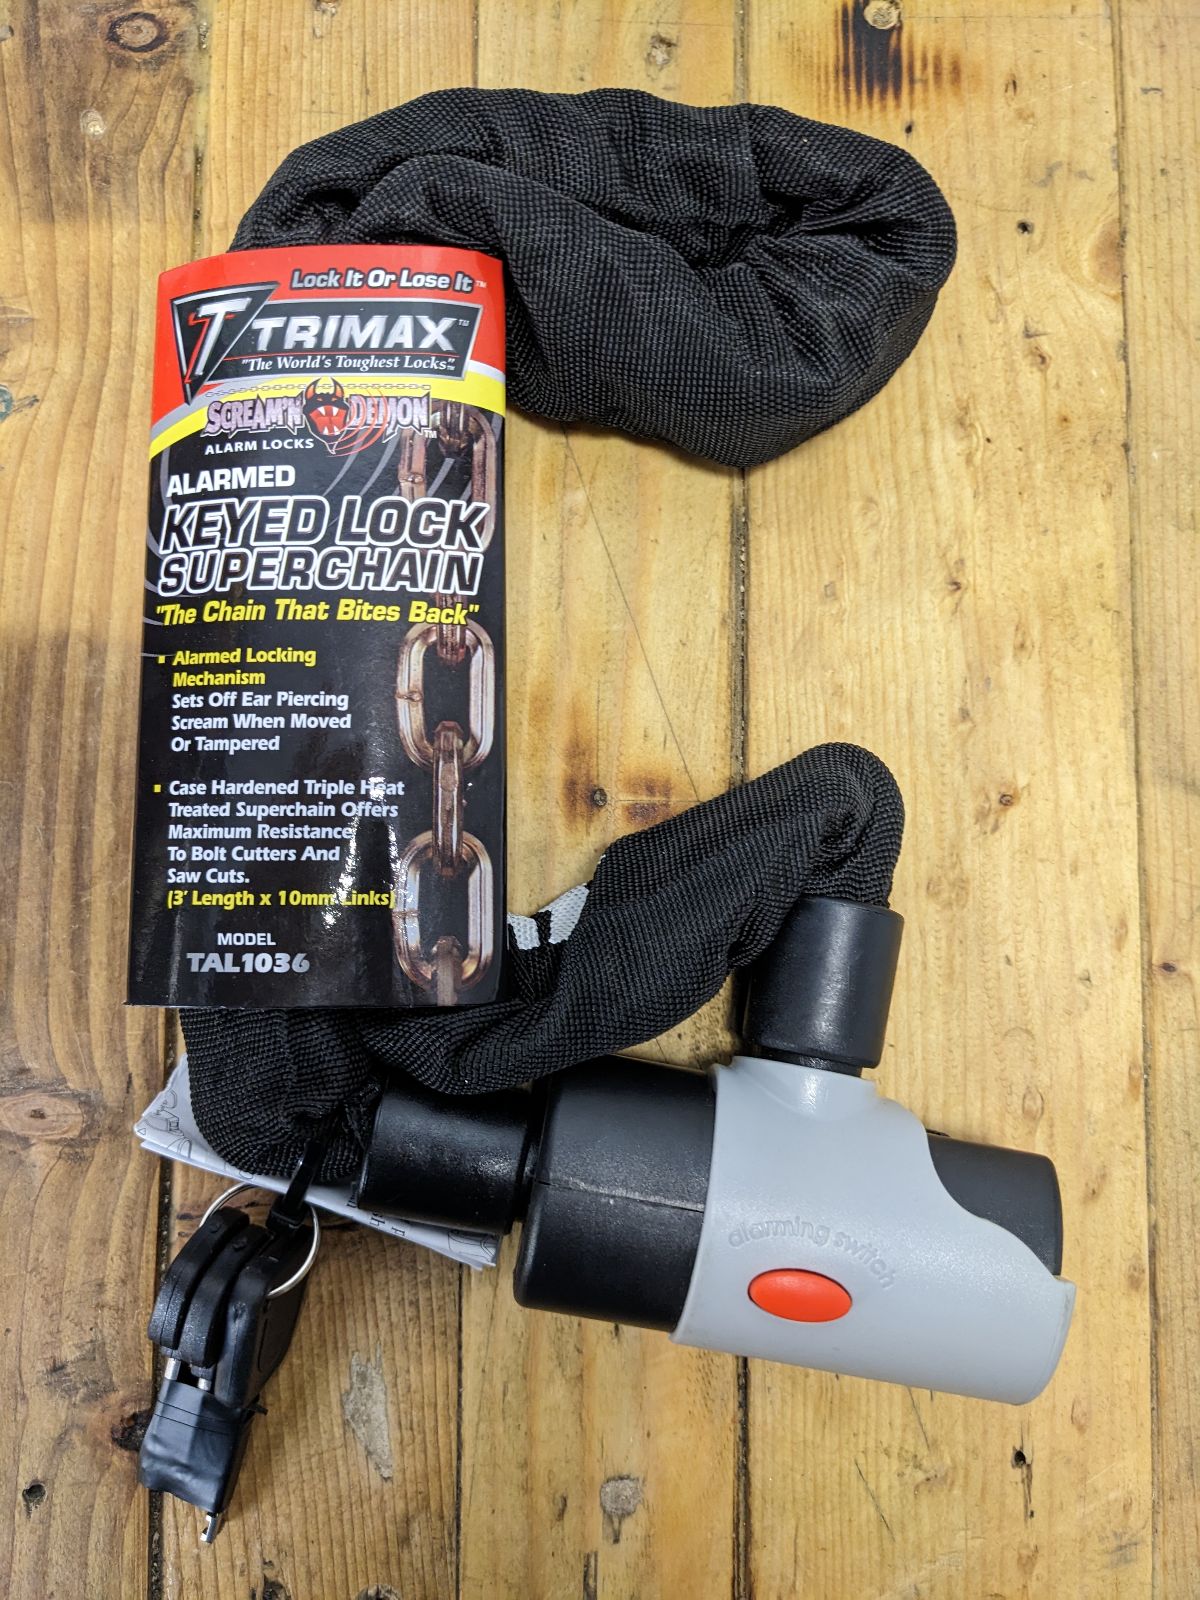 TRIMAX - Alarm Lock, 10mm links chain - 3'